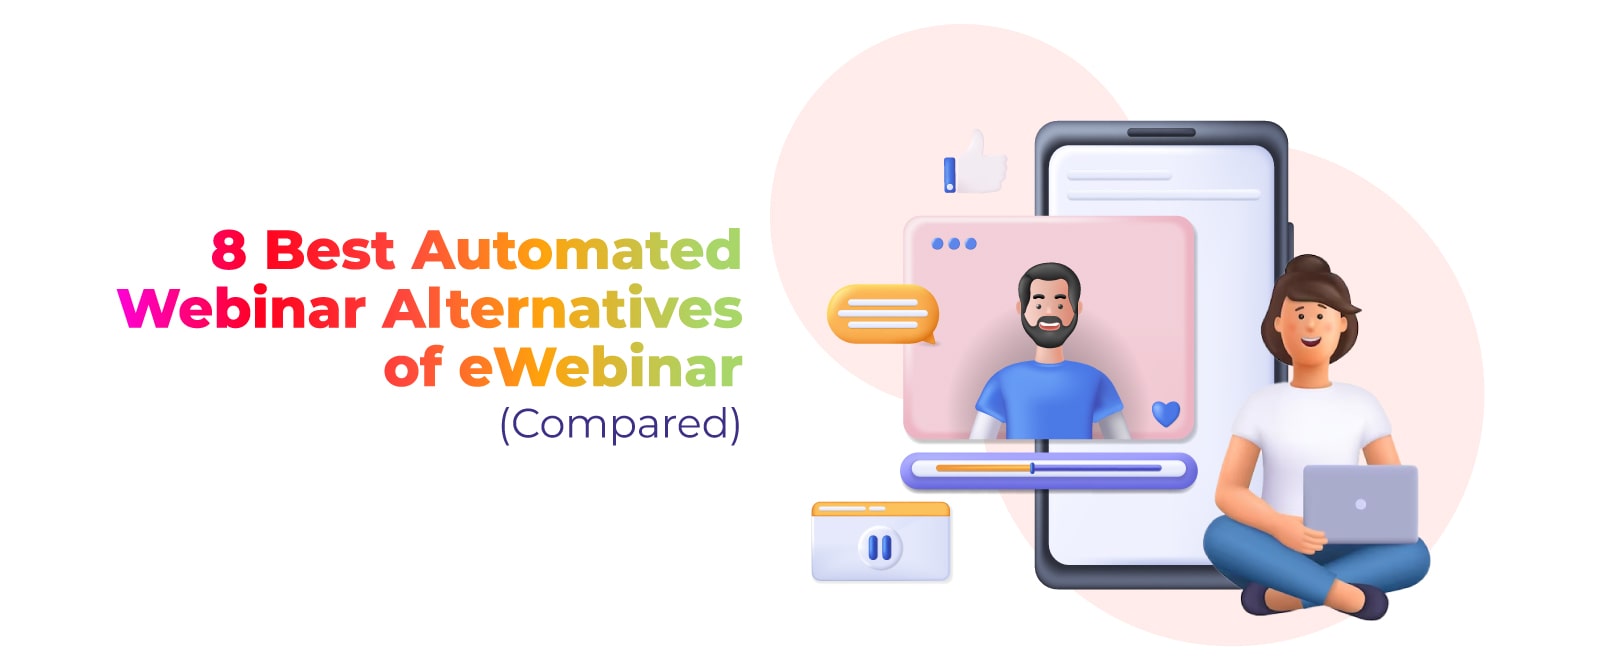 8 Best Automated Webinar Alternatives of eWebinar (Compared)